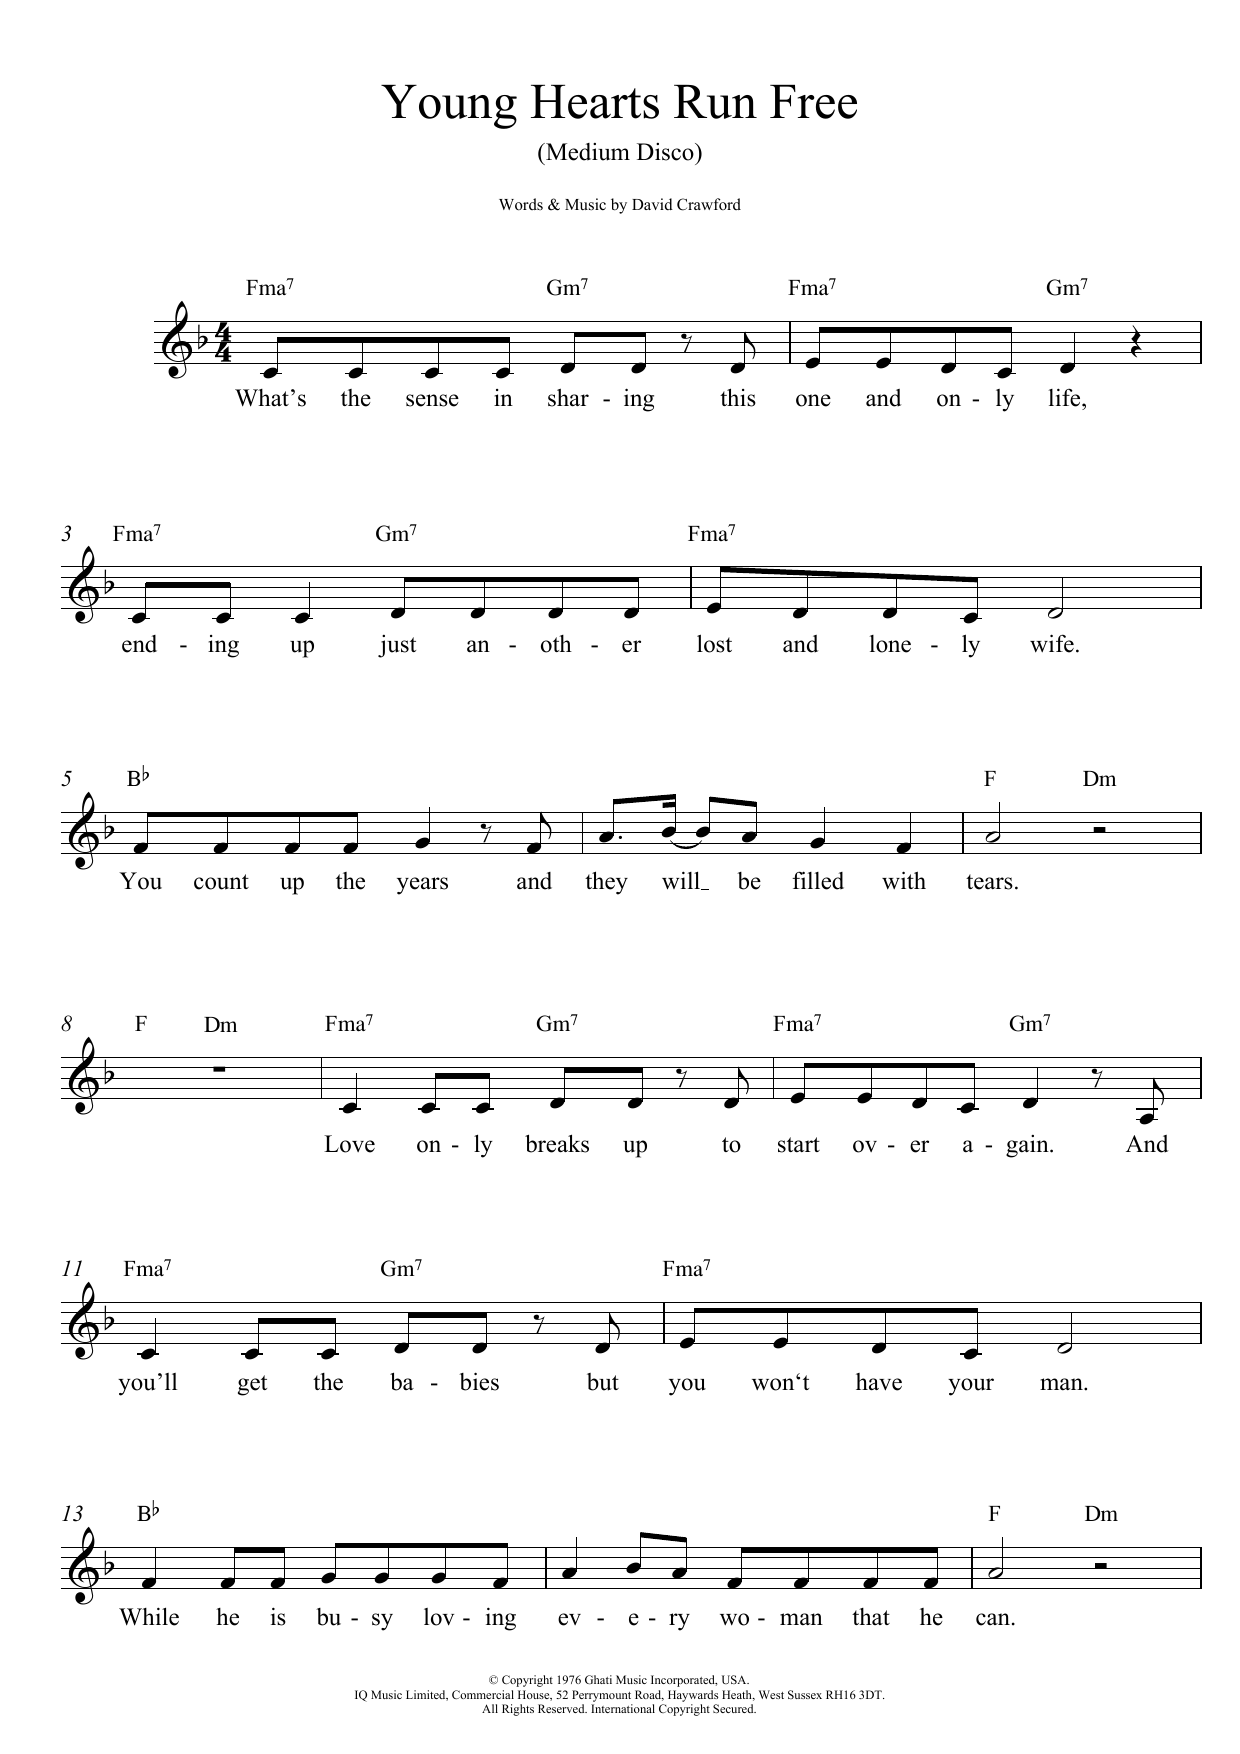 David Crawford Young Hearts Run Free Sheet Music Notes & Chords for Melody Line, Lyrics & Chords - Download or Print PDF